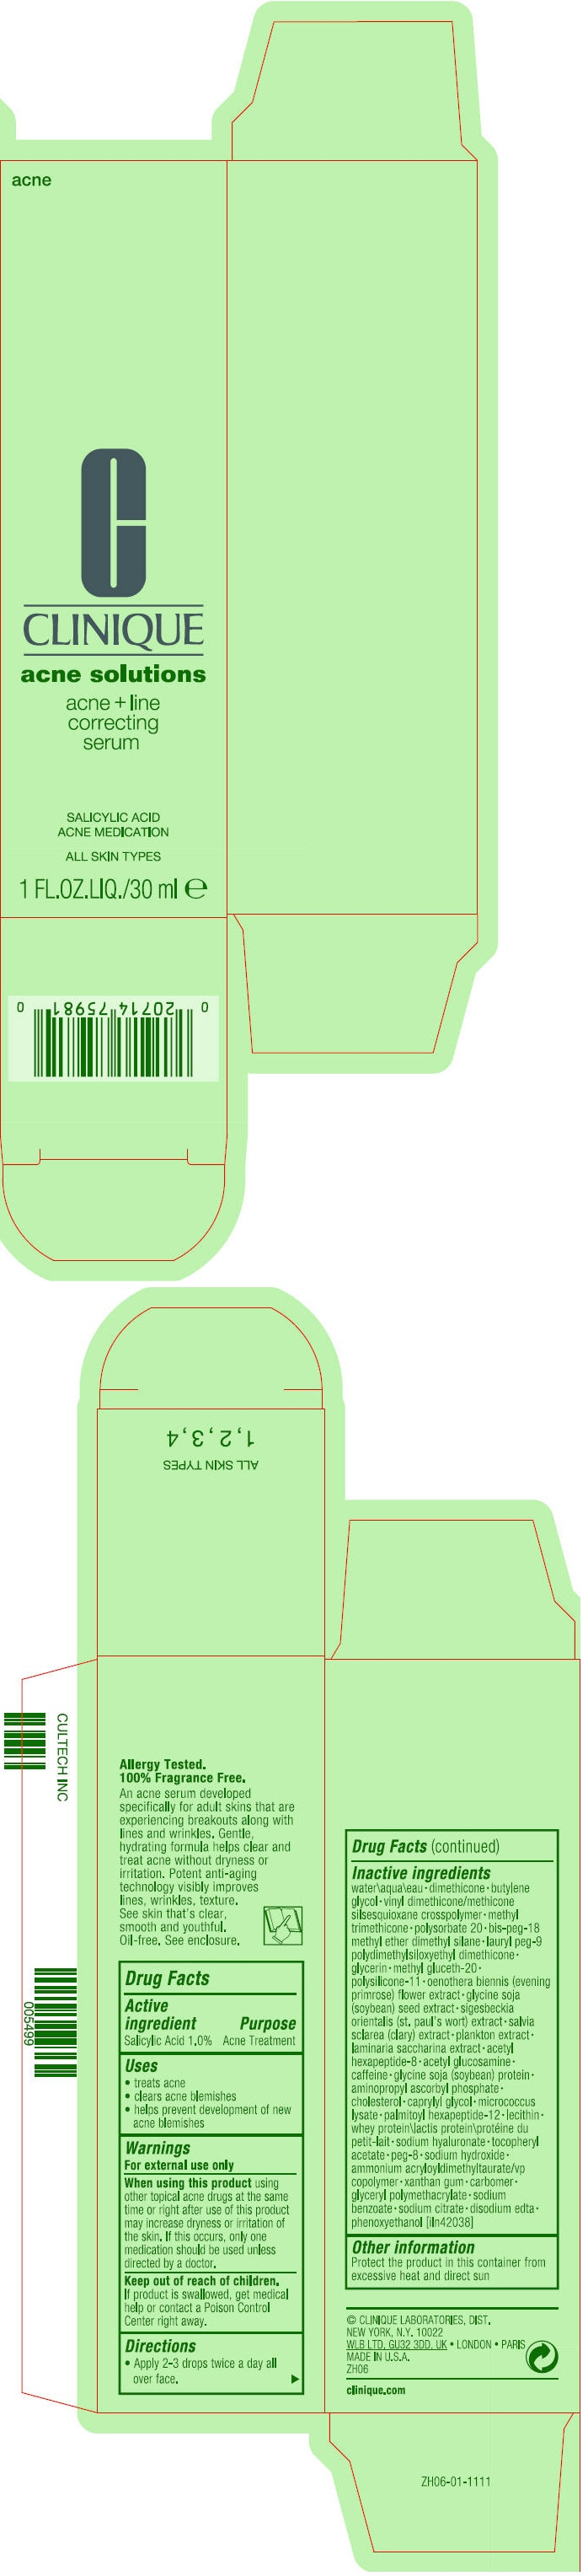 PRINCIPAL DISPLAY PANEL - 30 ml Bottle Carton